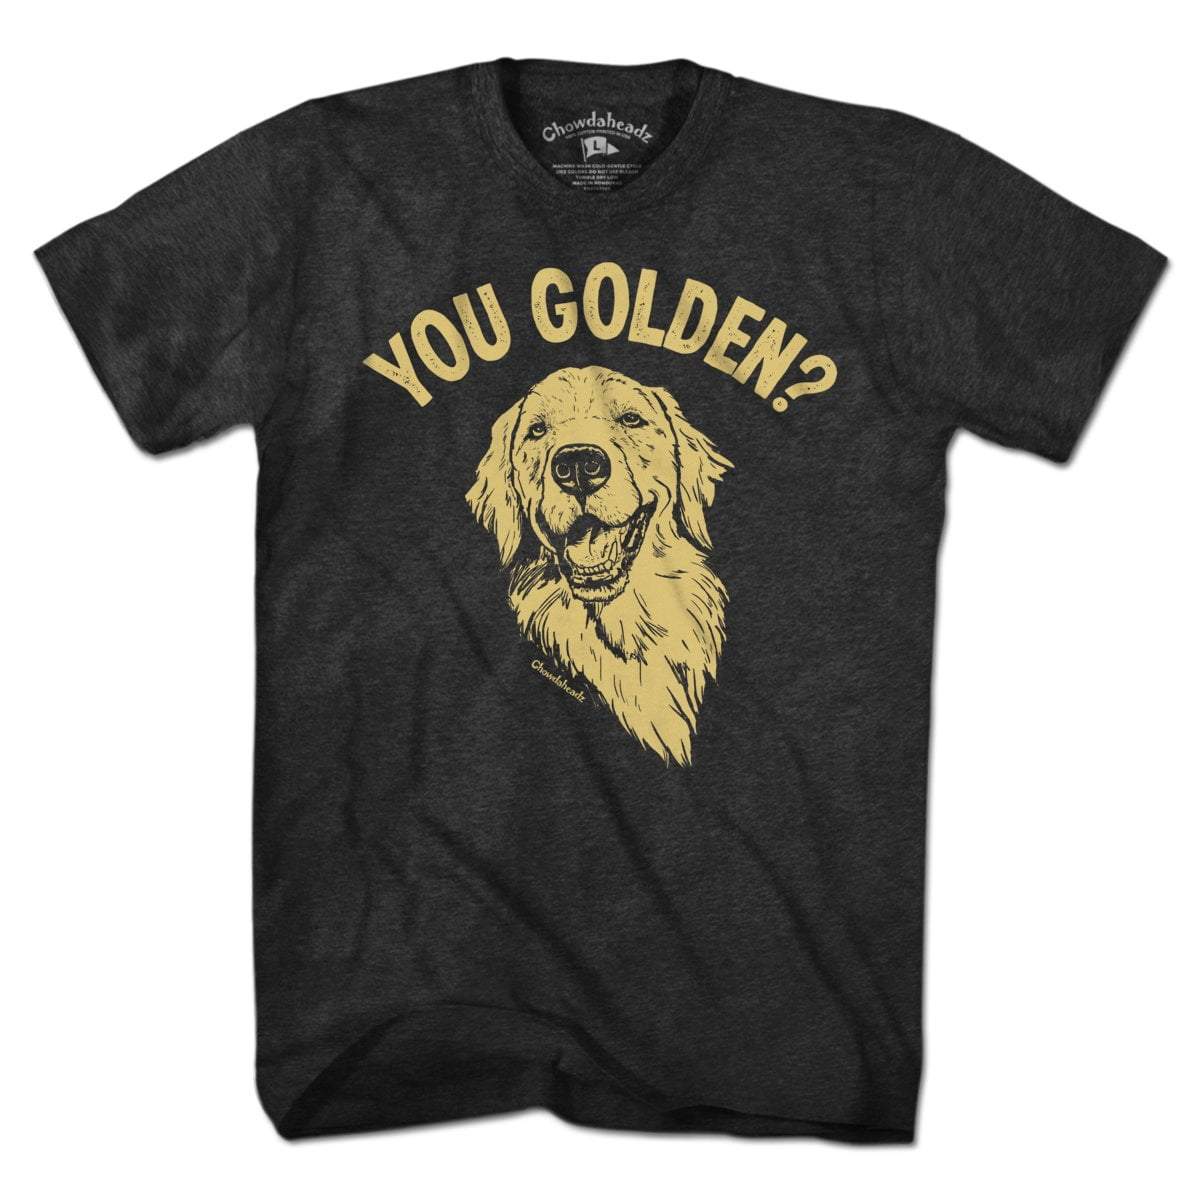 You Golden? T-Shirt - Chowdaheadz